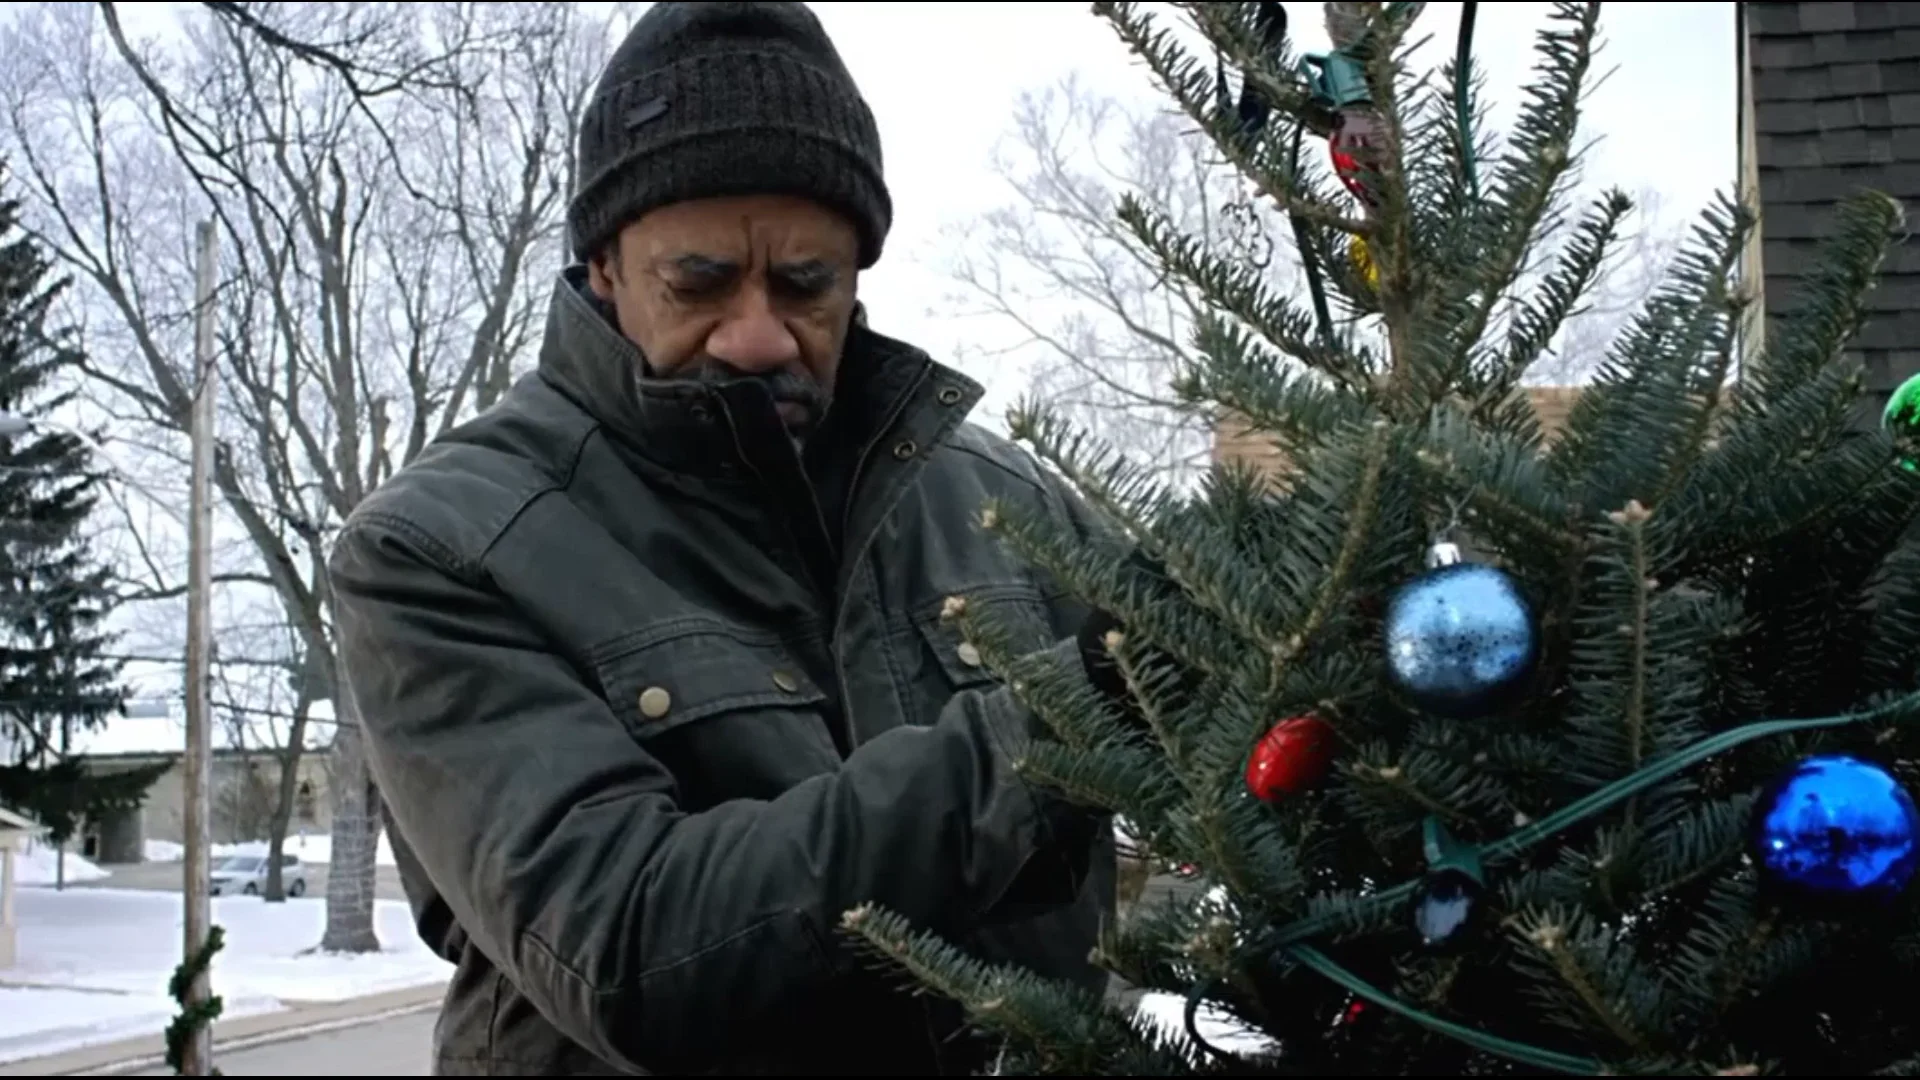 3D printed Christmas Tree drinks dispenser on Vimeo